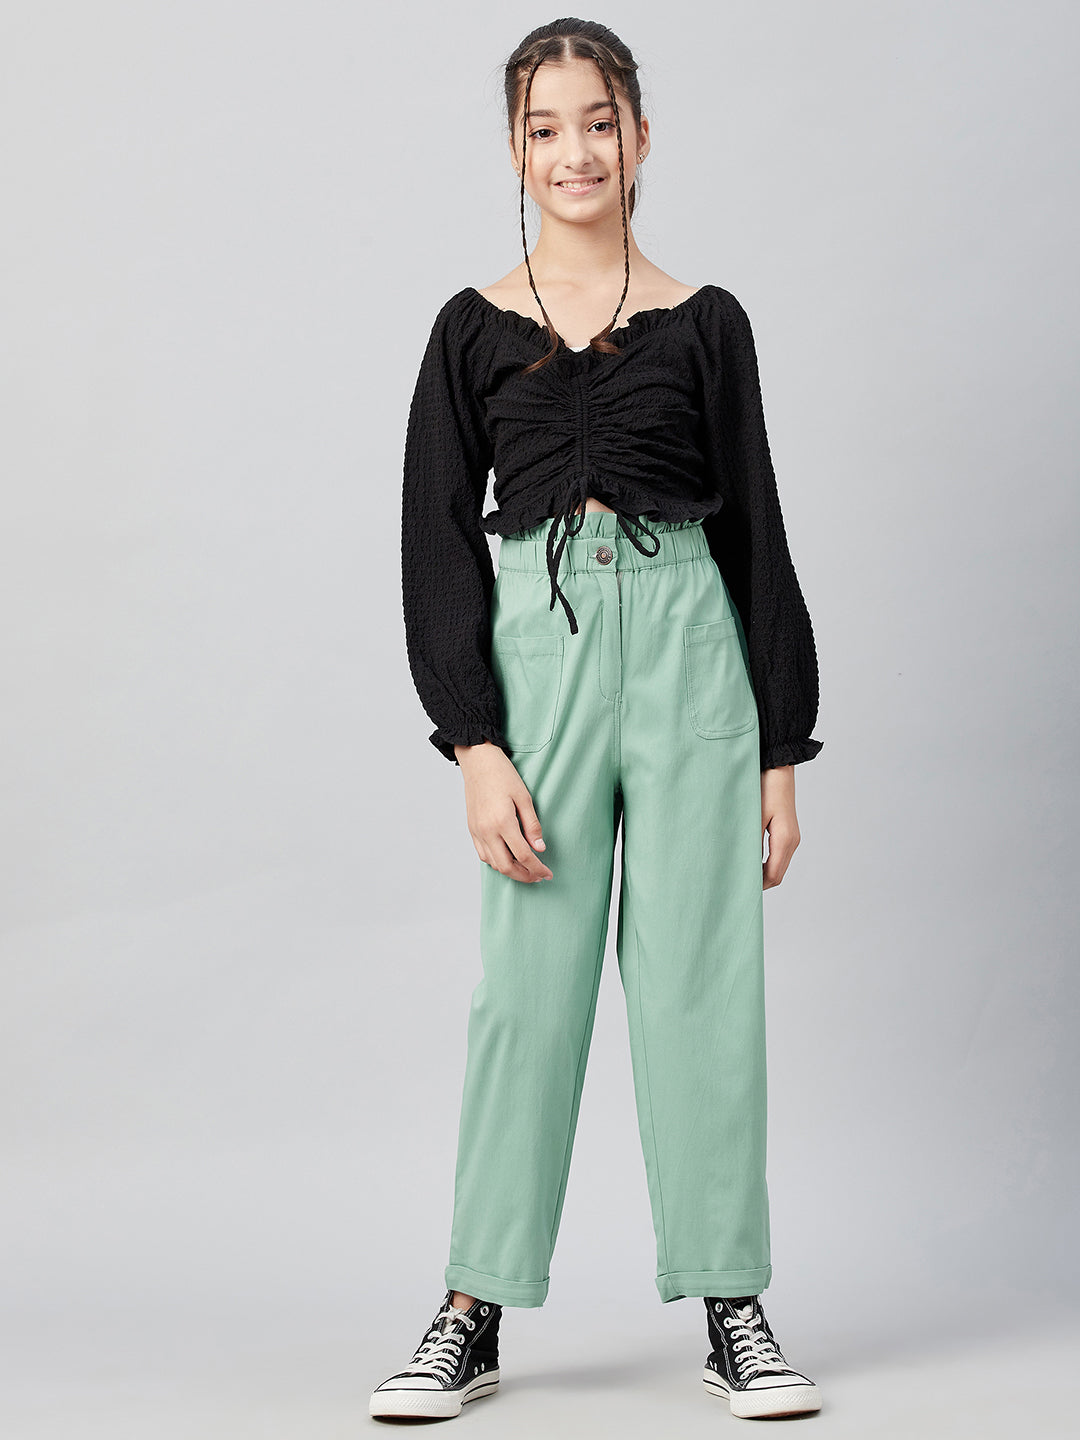 Girl Green Cargo Pants T-shirt Stock Photo 1545916658 | Shutterstock